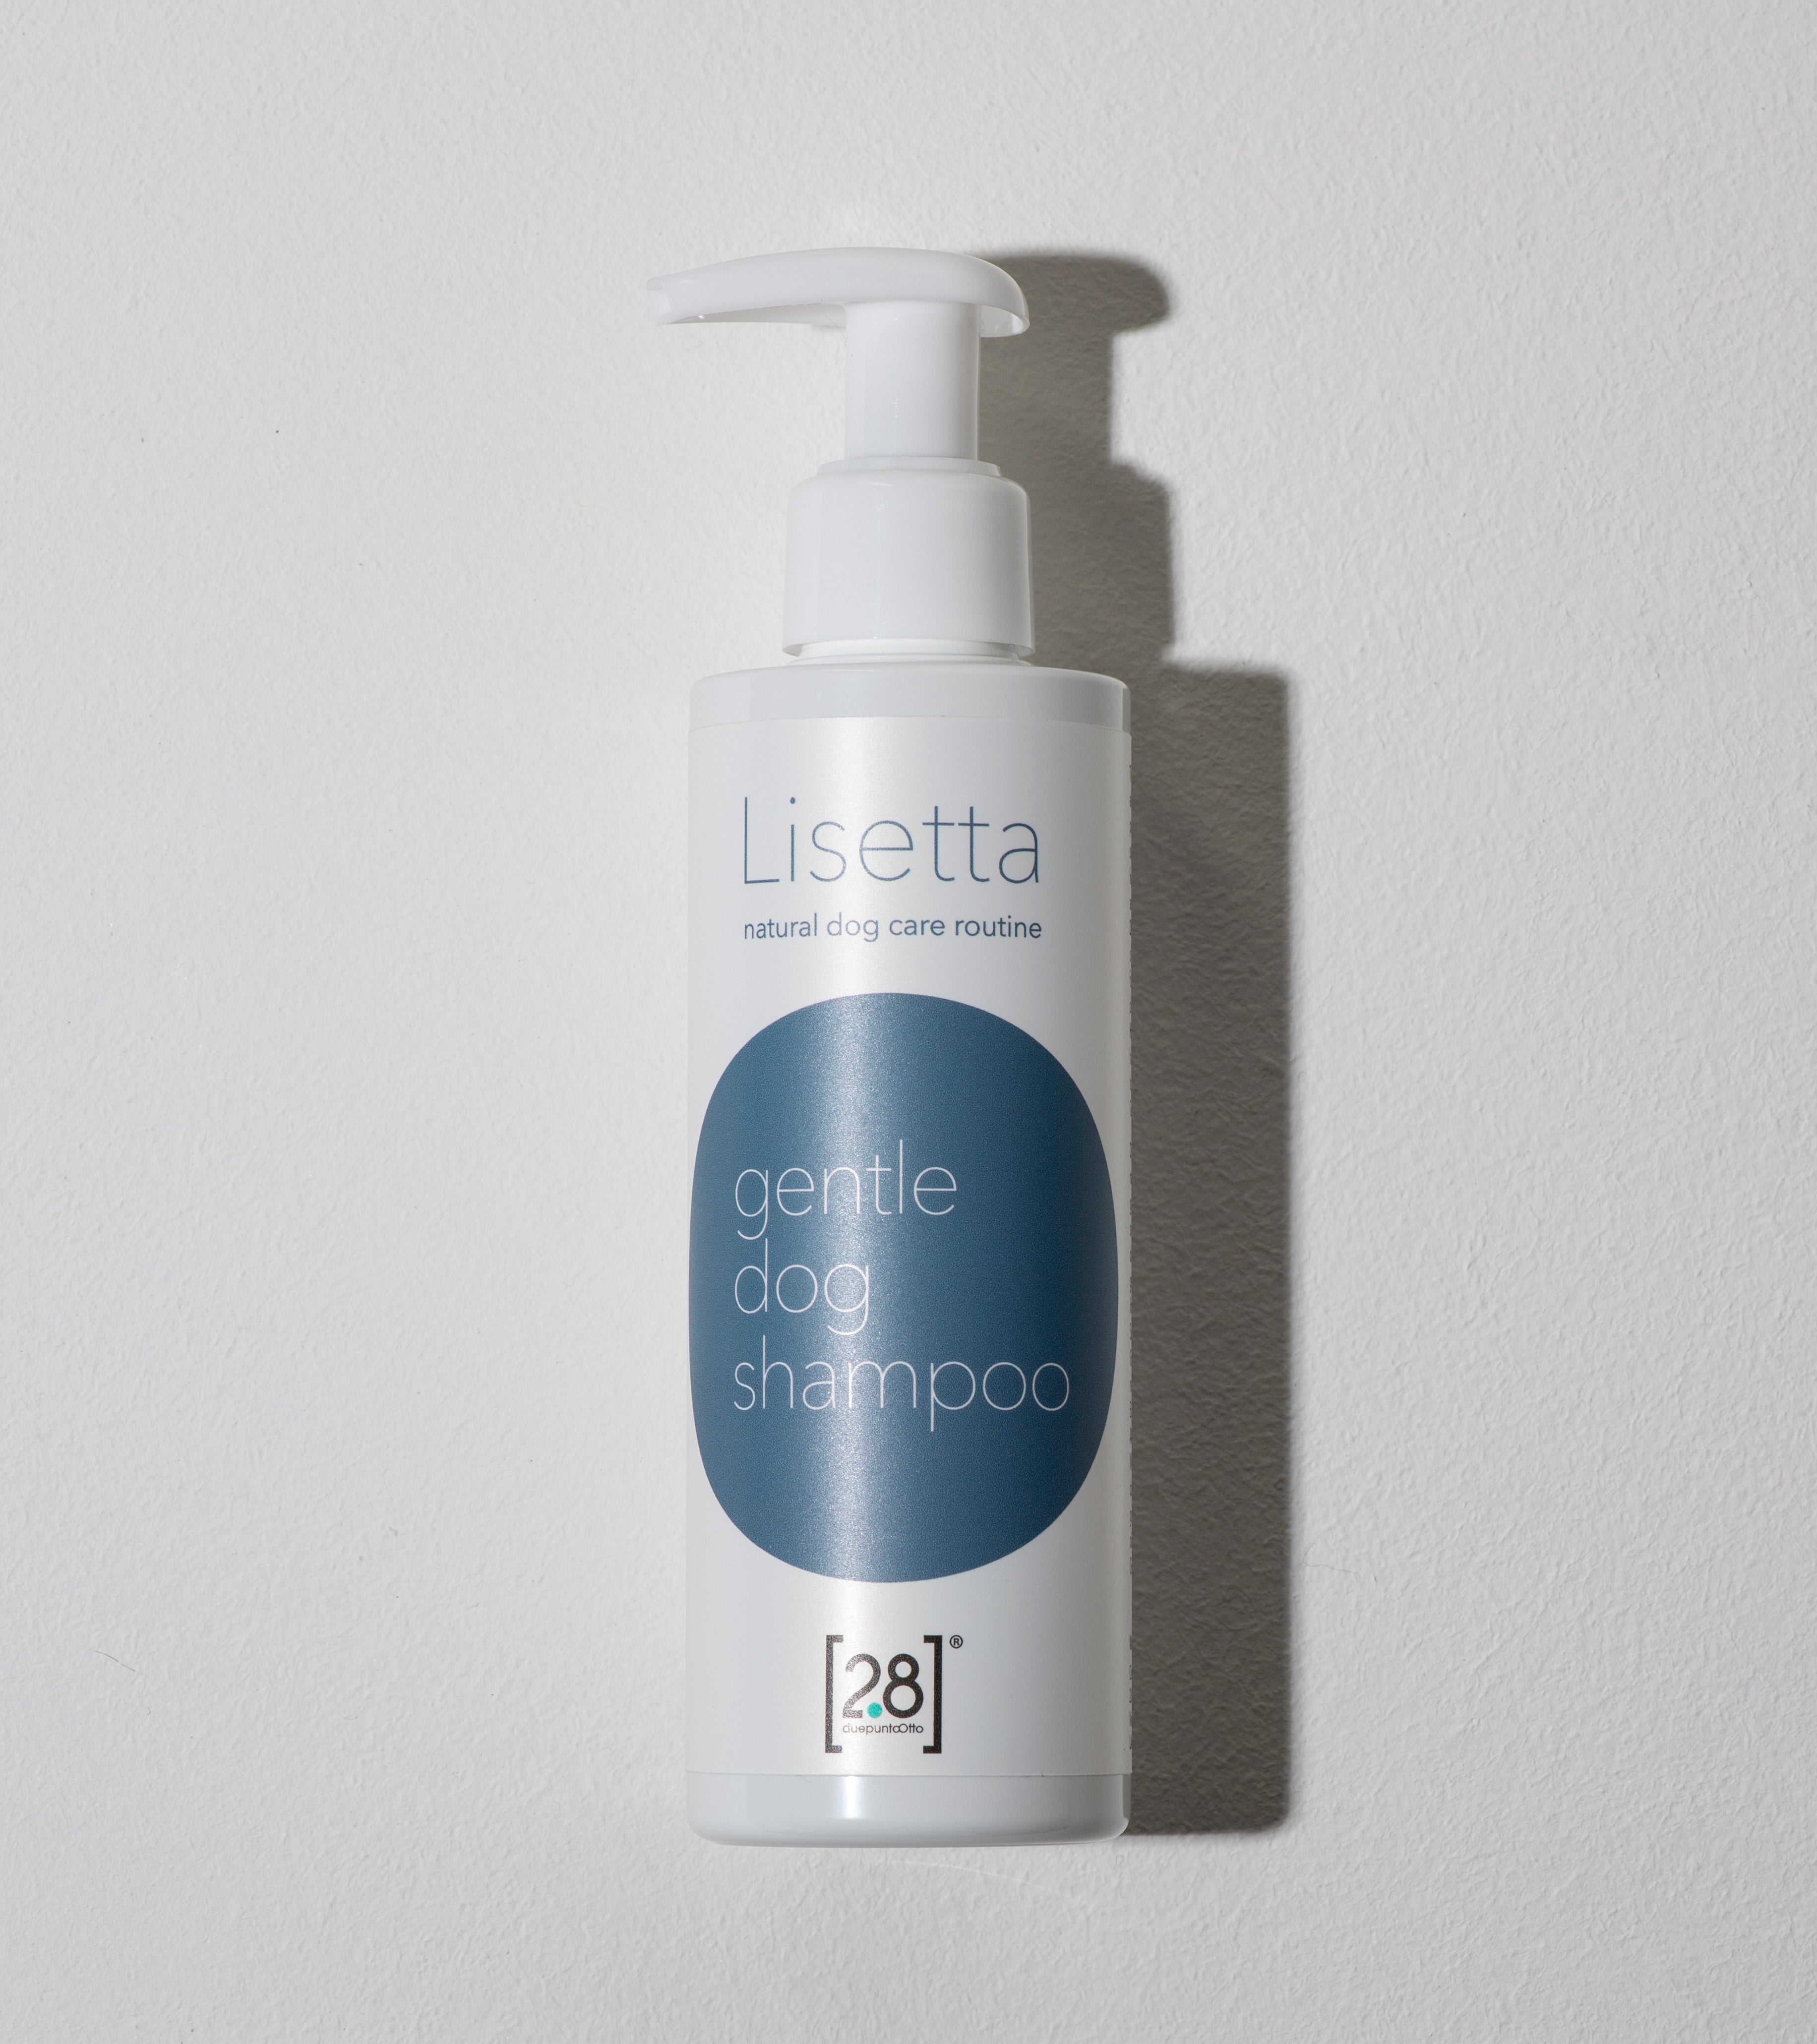 lisetta-natural-dog-shampoo.jpg